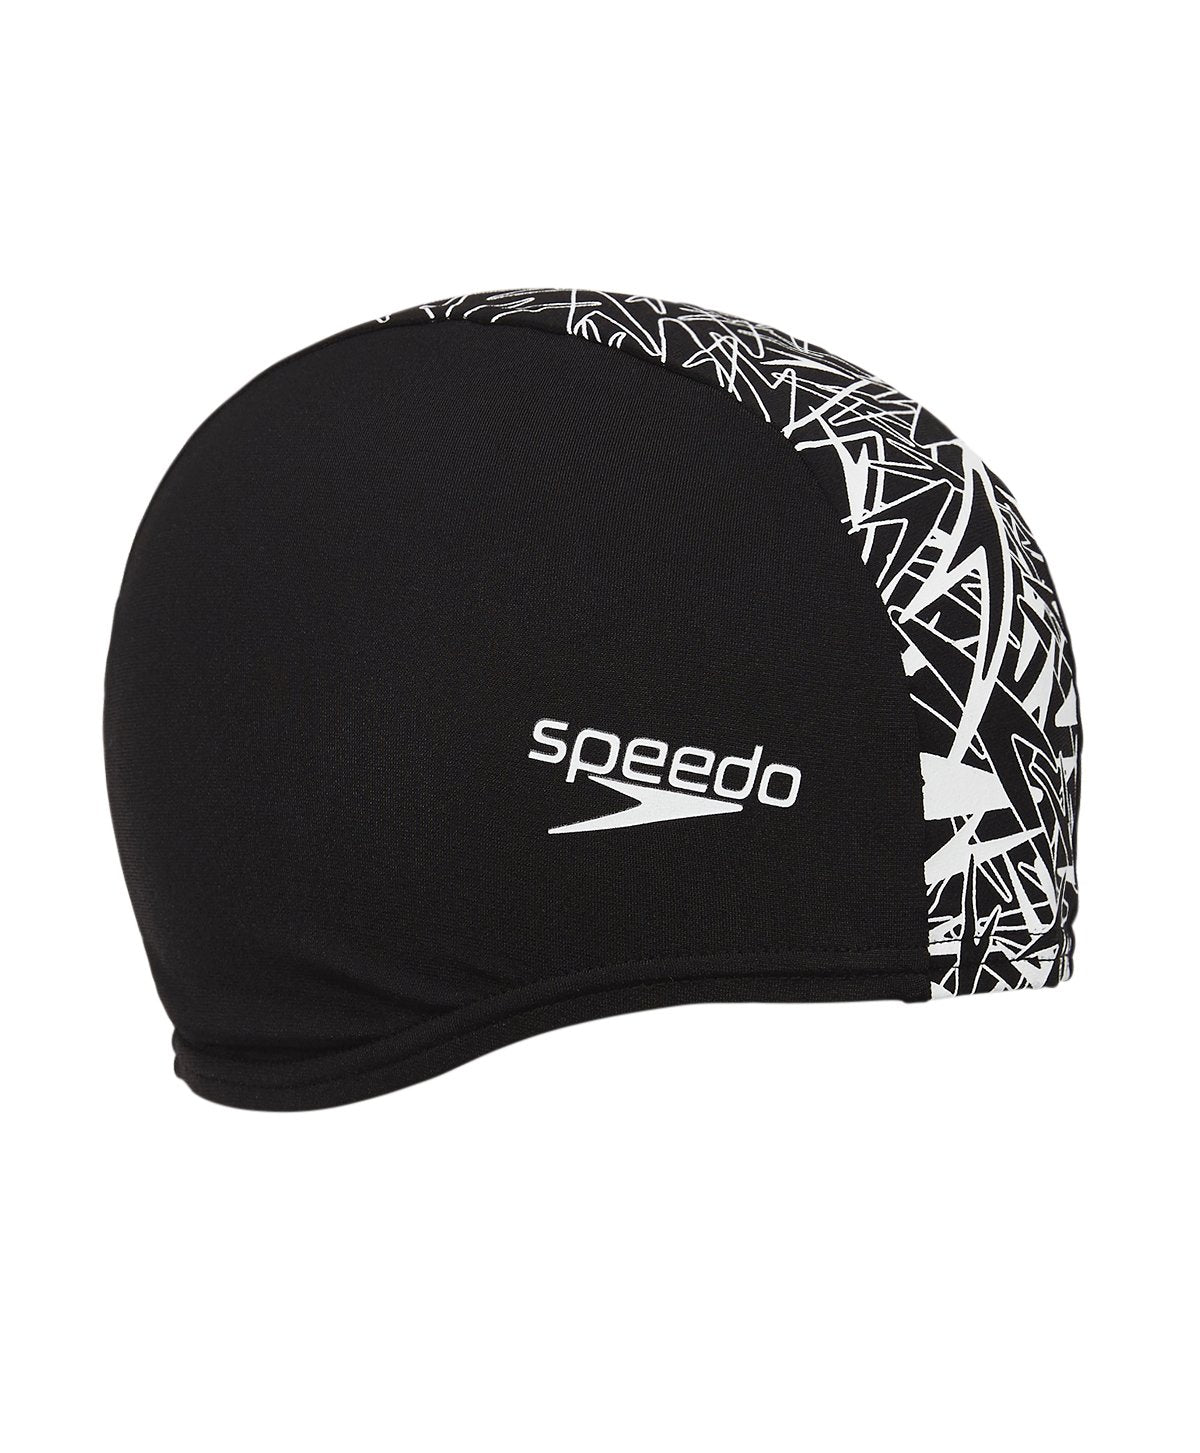 Speedo Unisex-Adult Boom Endurance+ Swimcap - Best Price online Prokicksports.com